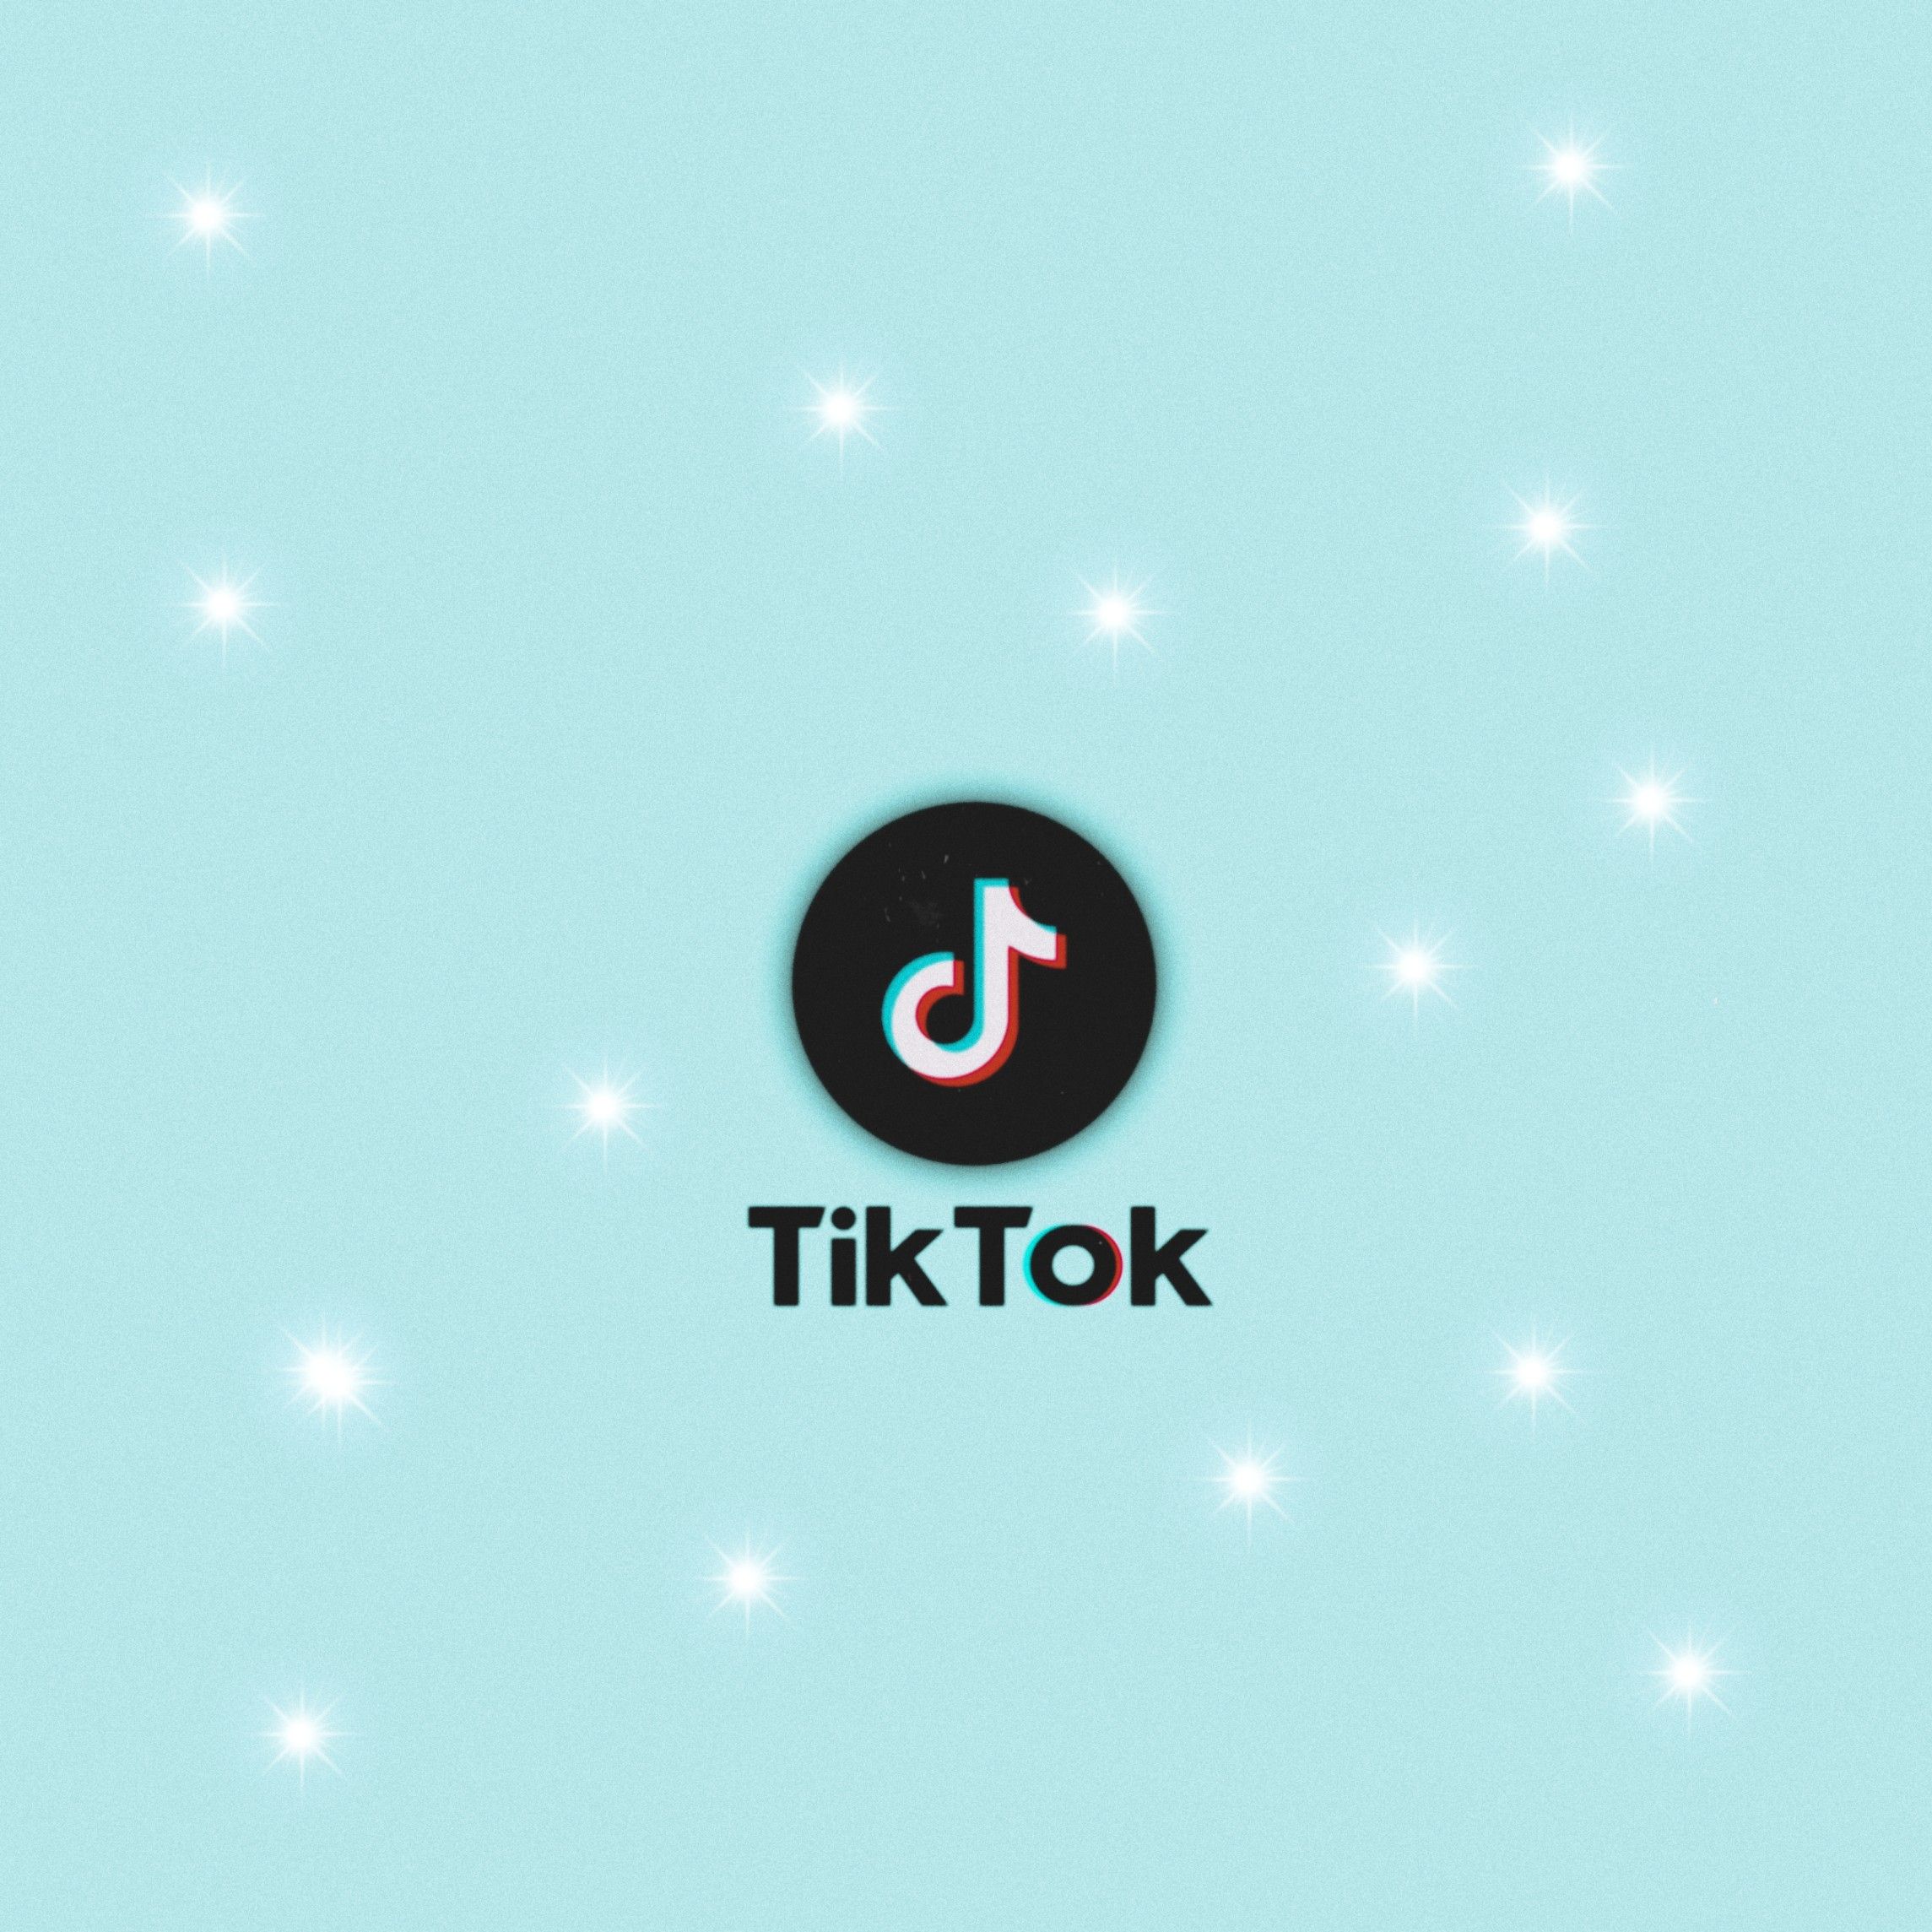 tiktok app icon background Image by °wallpaper•